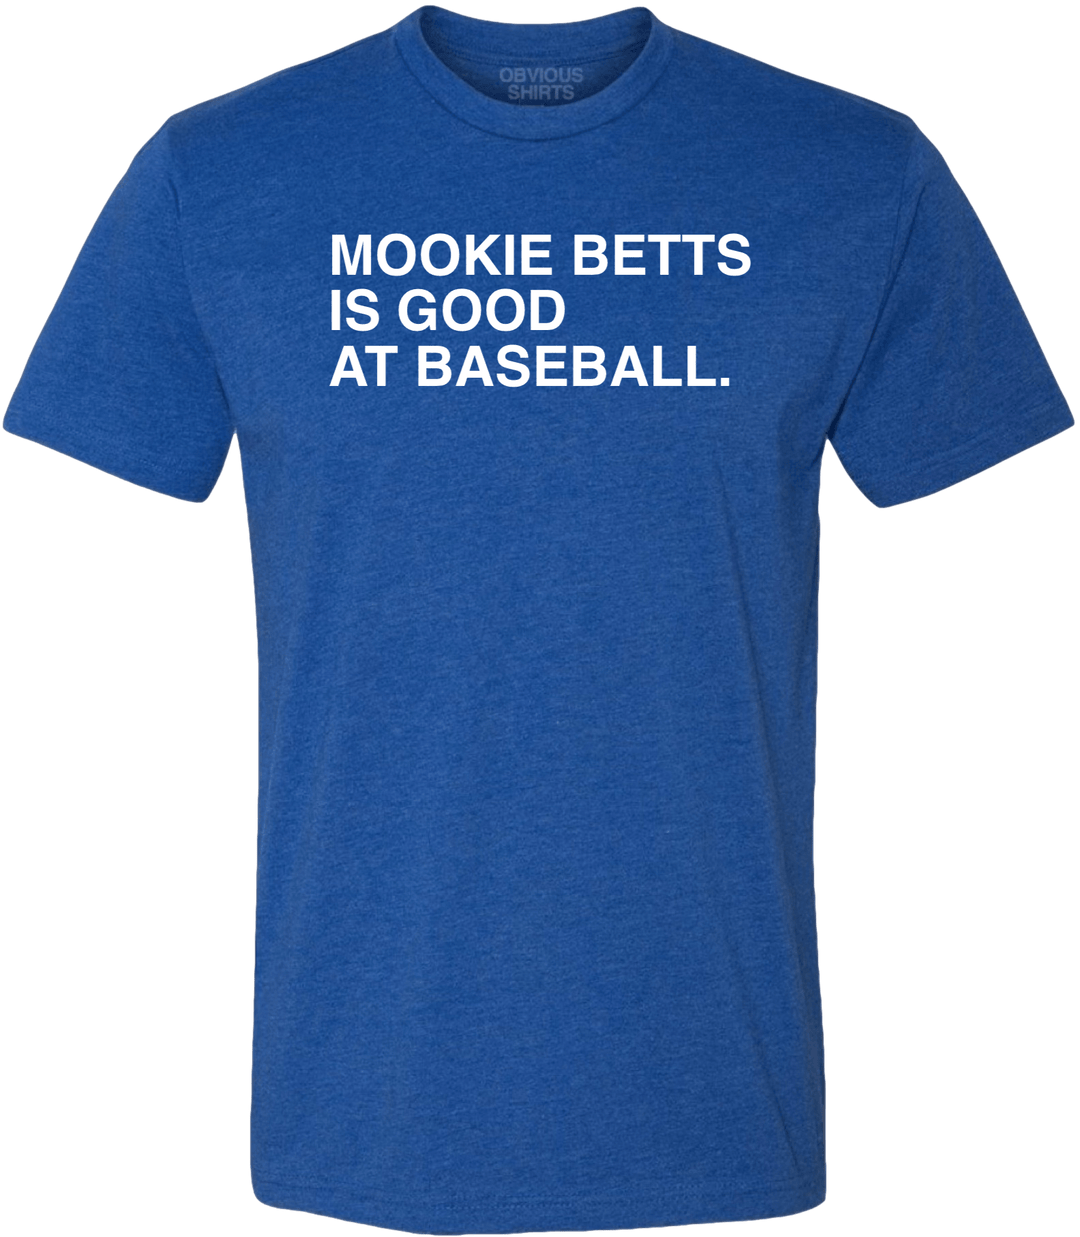 mookie betts jersey giveaway